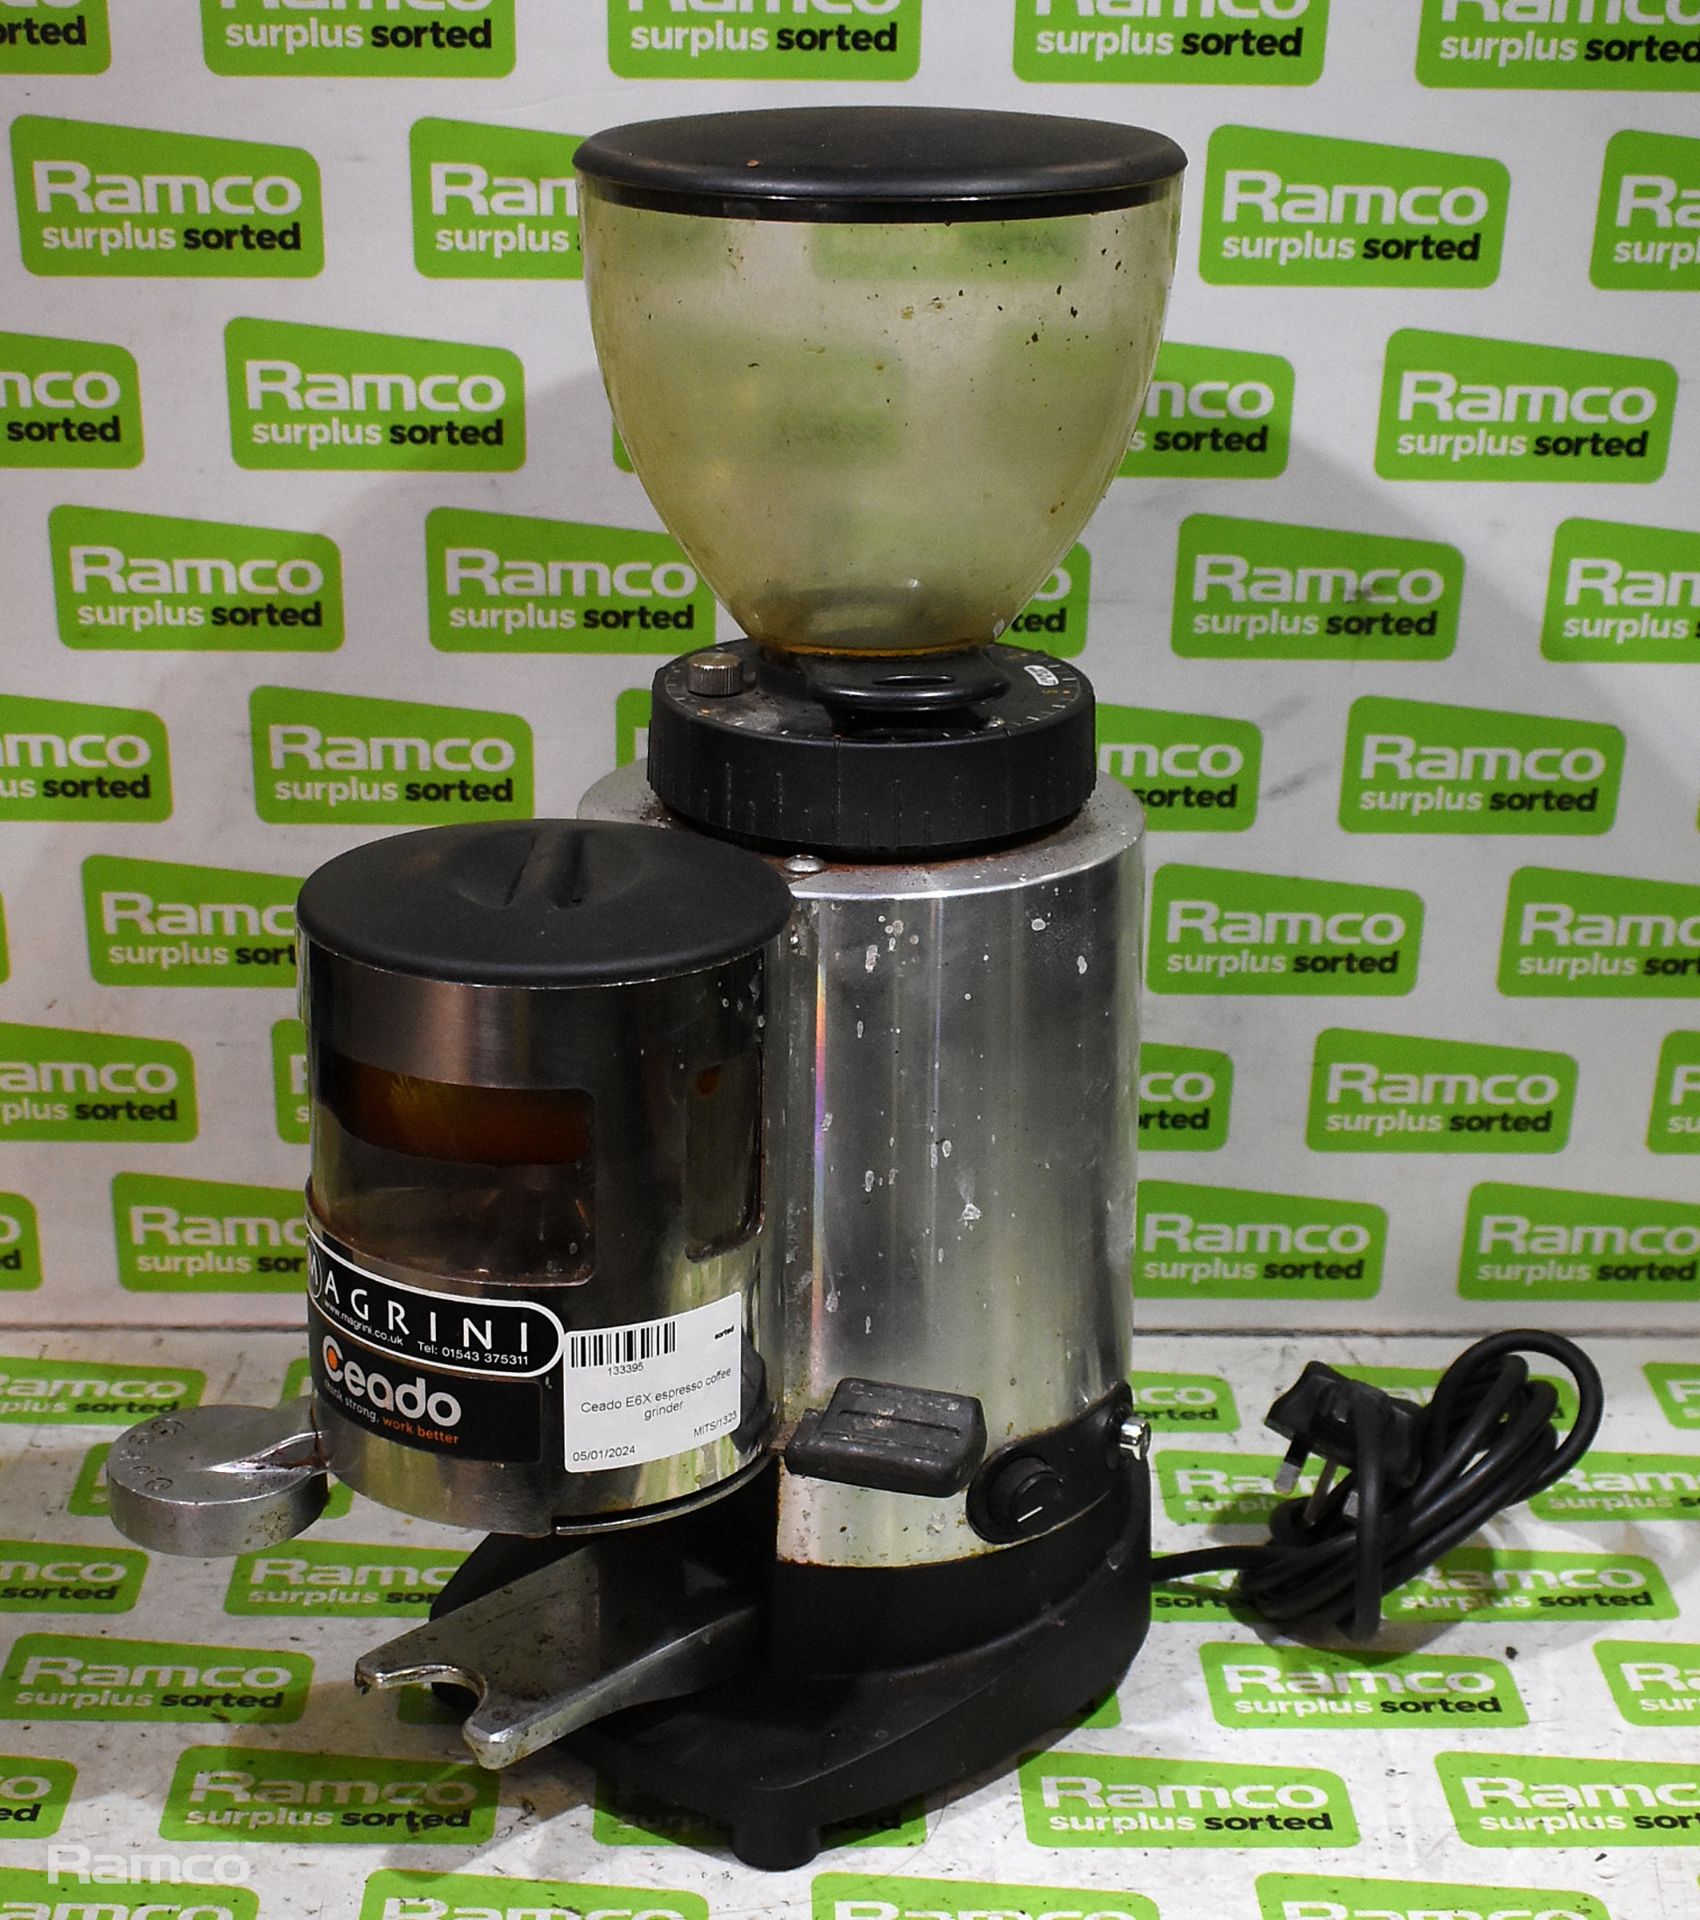 2x Ceado E6X espresso coffee grinders - Image 7 of 10